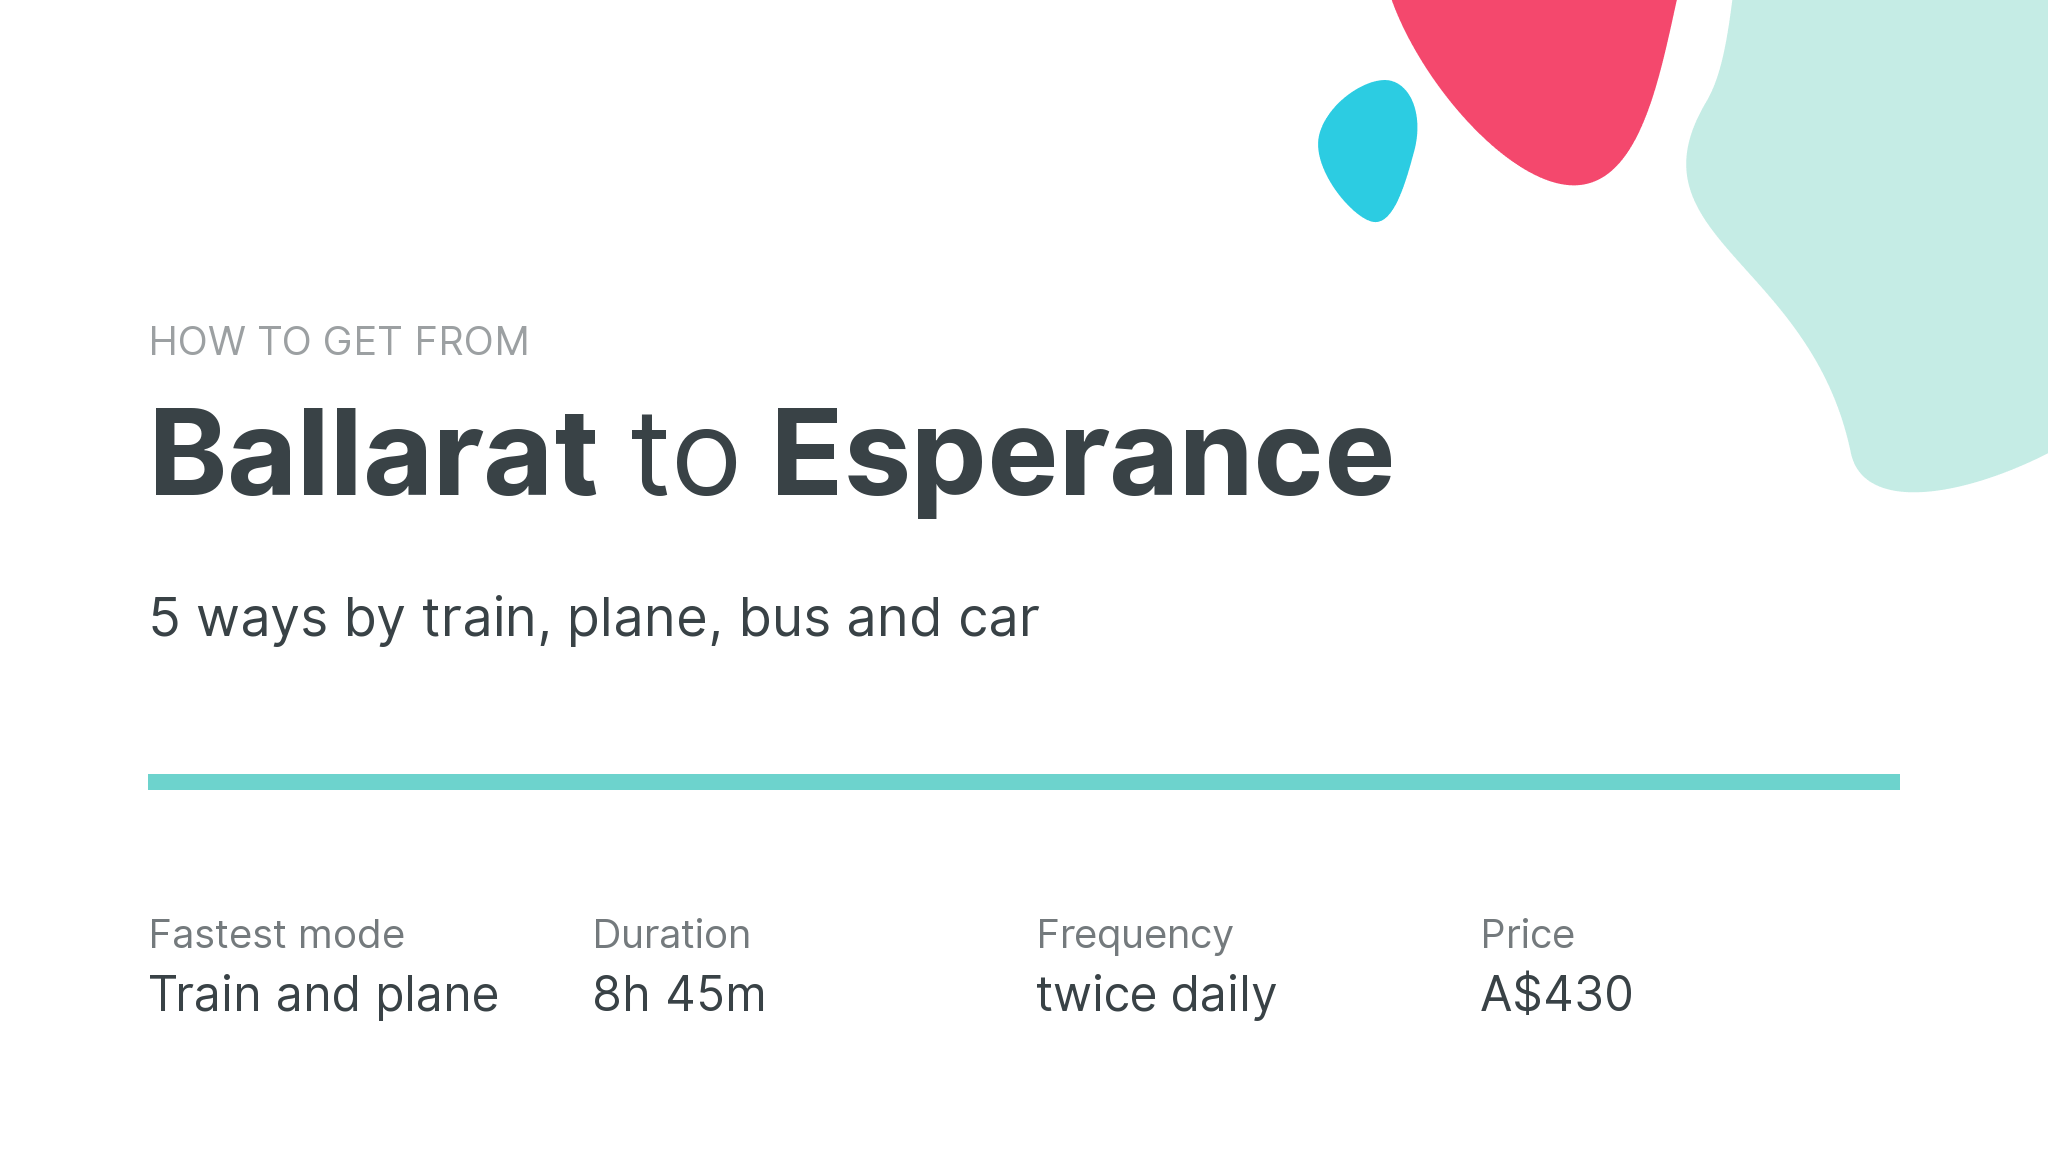 How do I get from Ballarat to Esperance